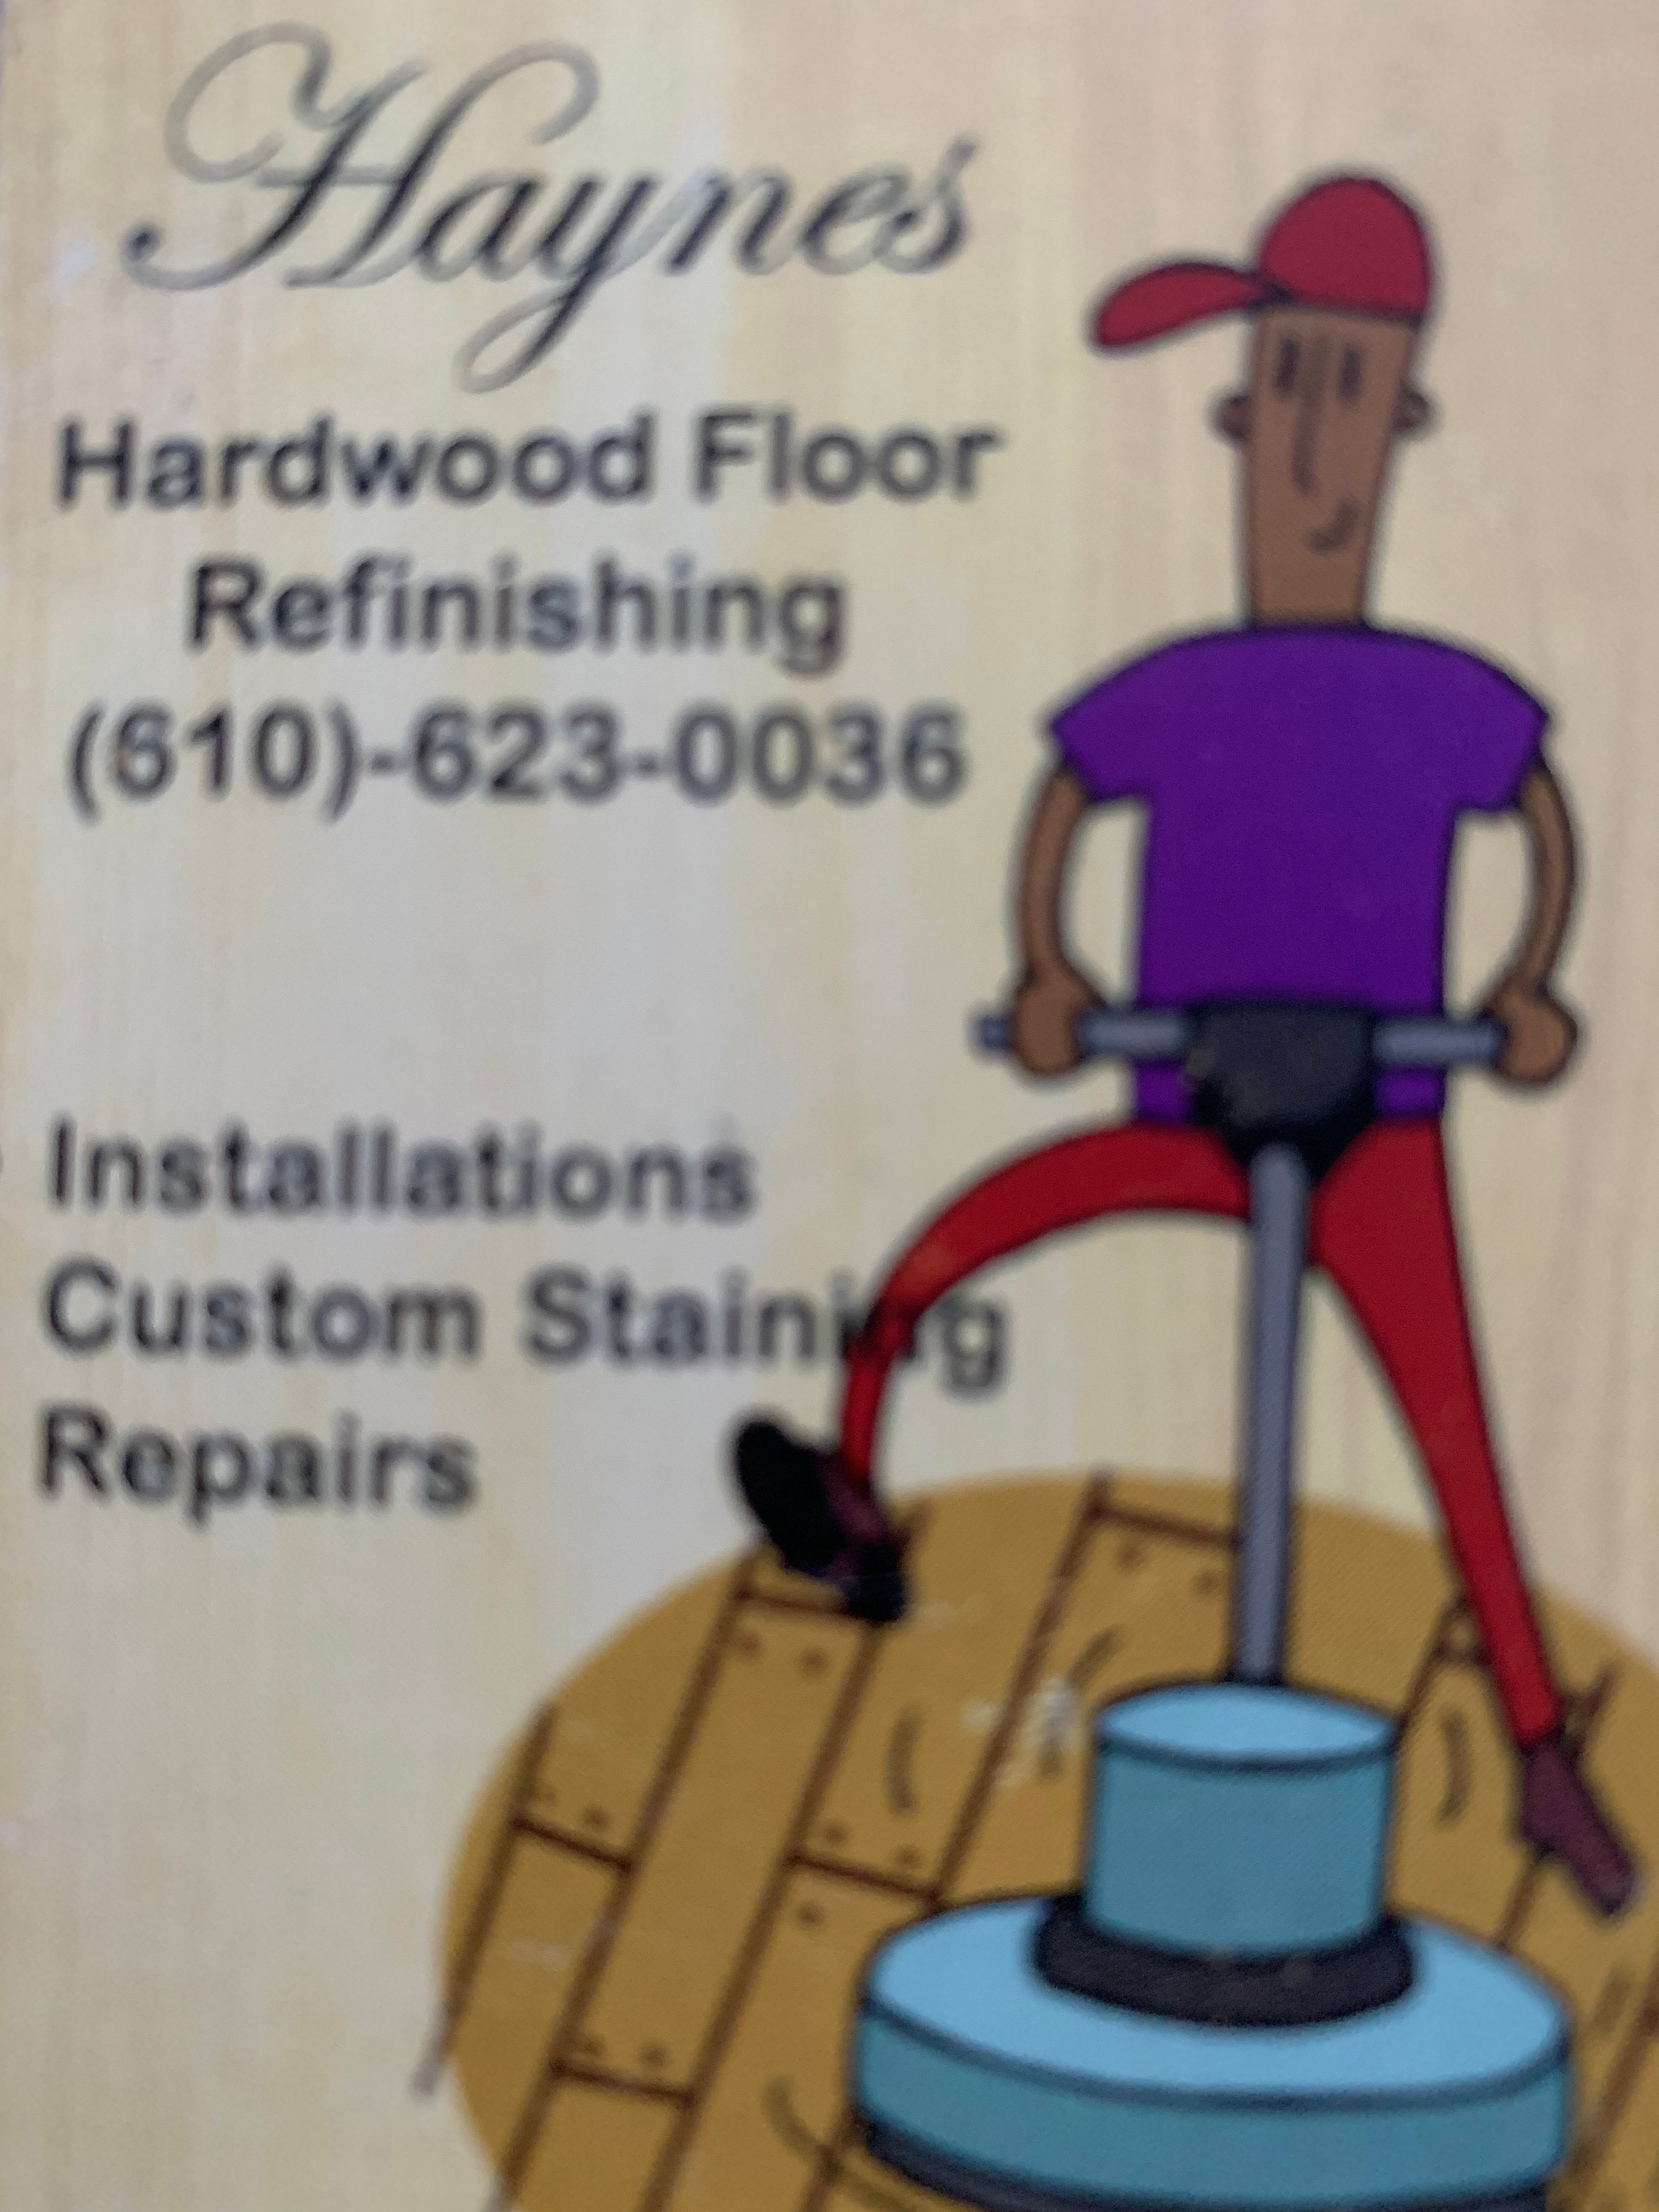 Haynes Hardwood Floor Refinishing Logo